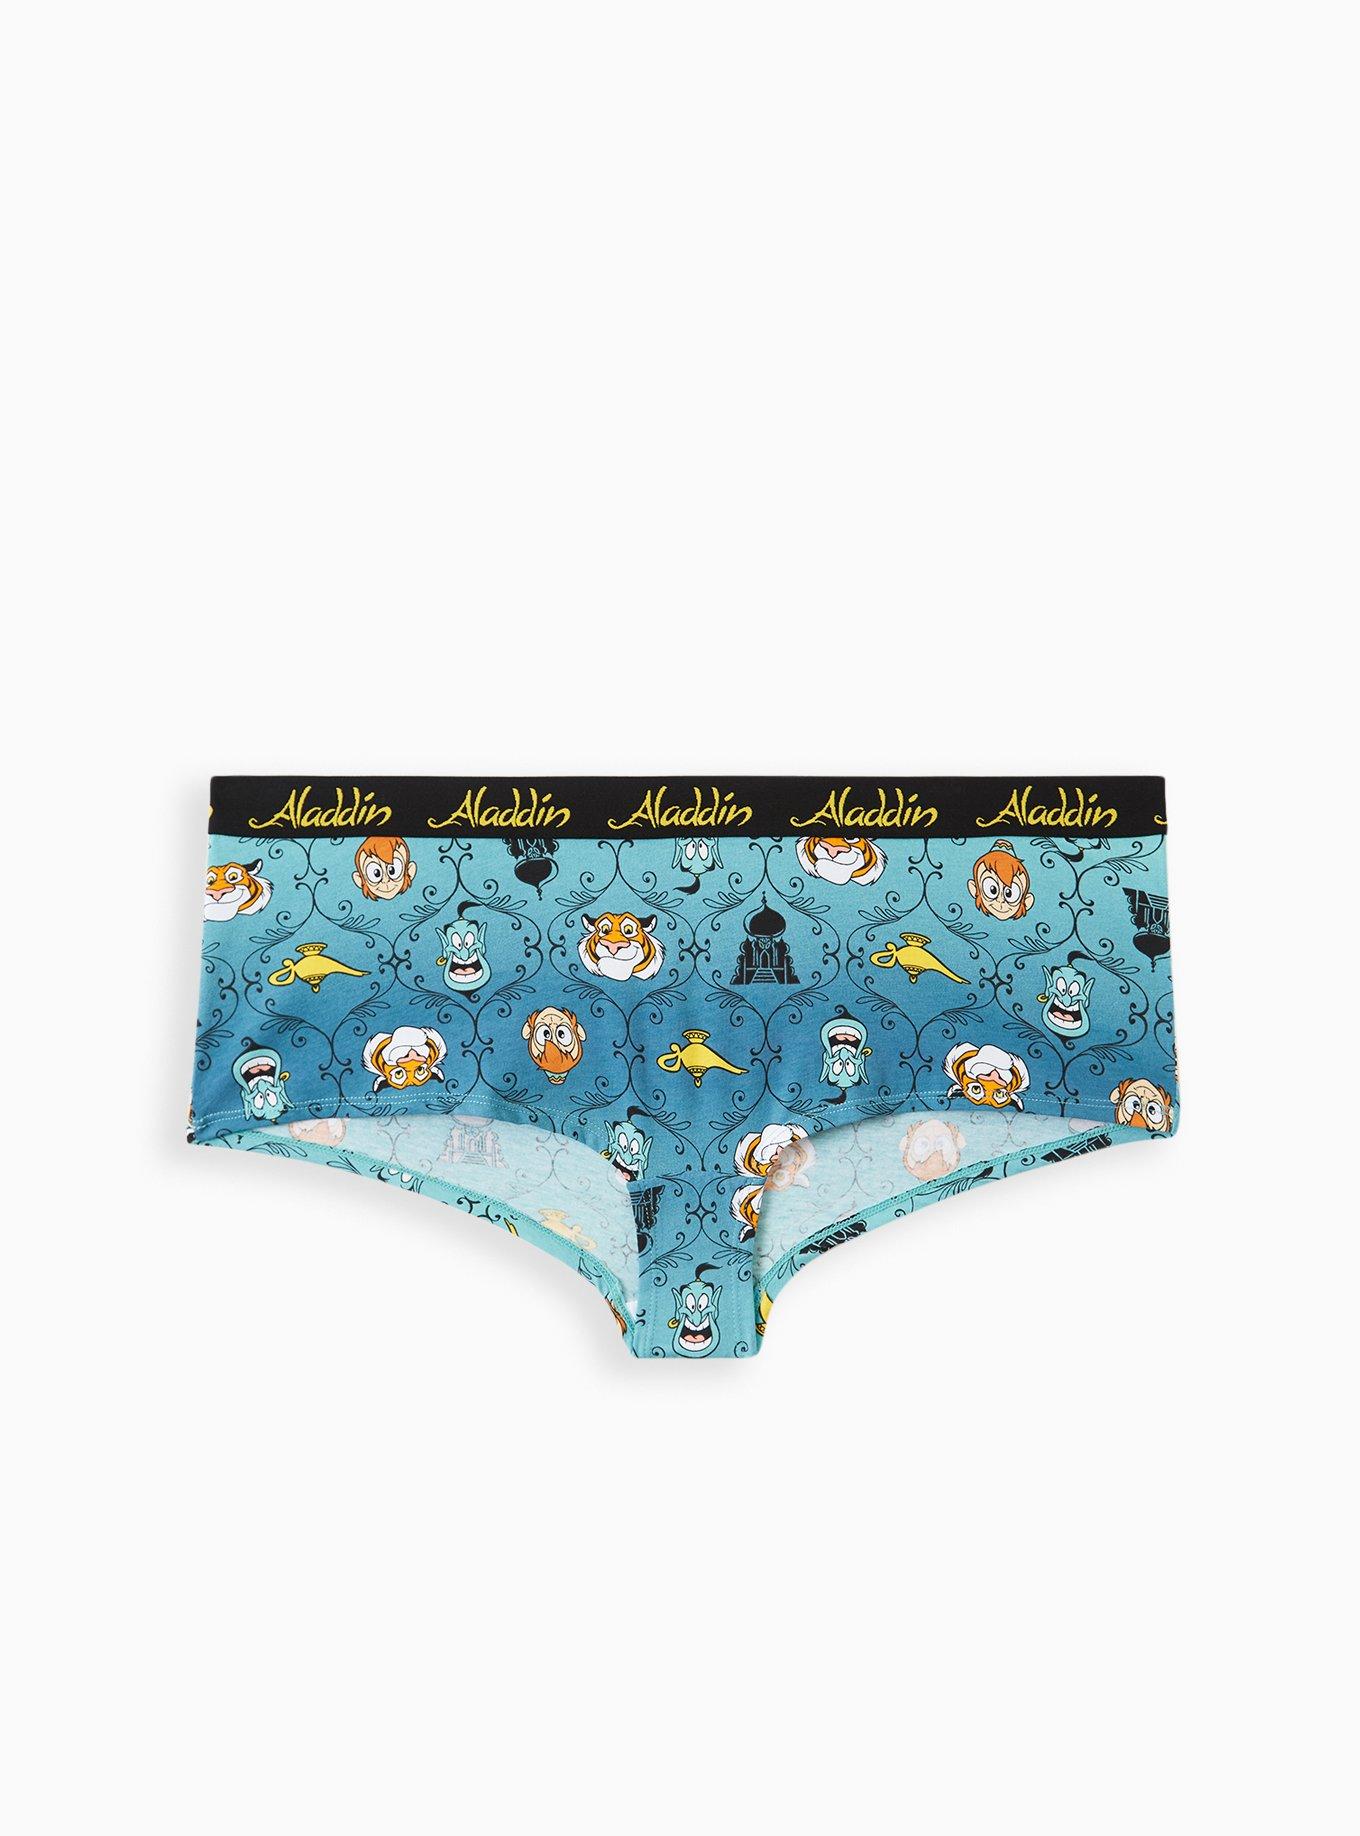 Torrid Boyshorts Panties Underwear Disney Aladdin Abu Genie Plus Size 3 22  / 24